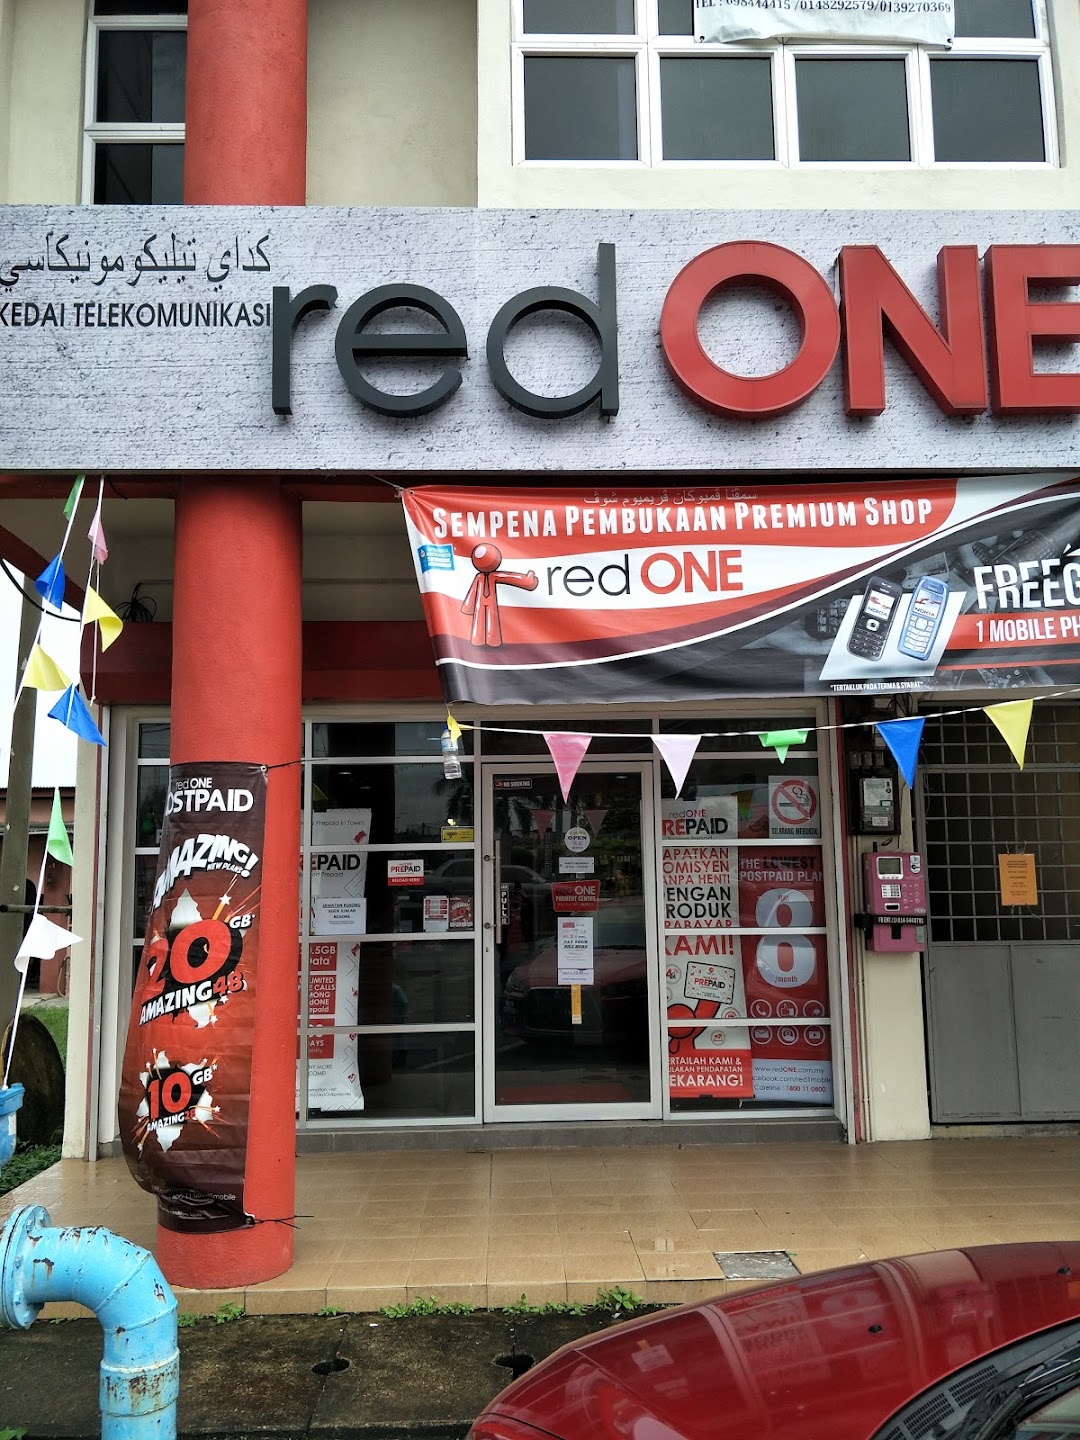 RedOne Premier Shop